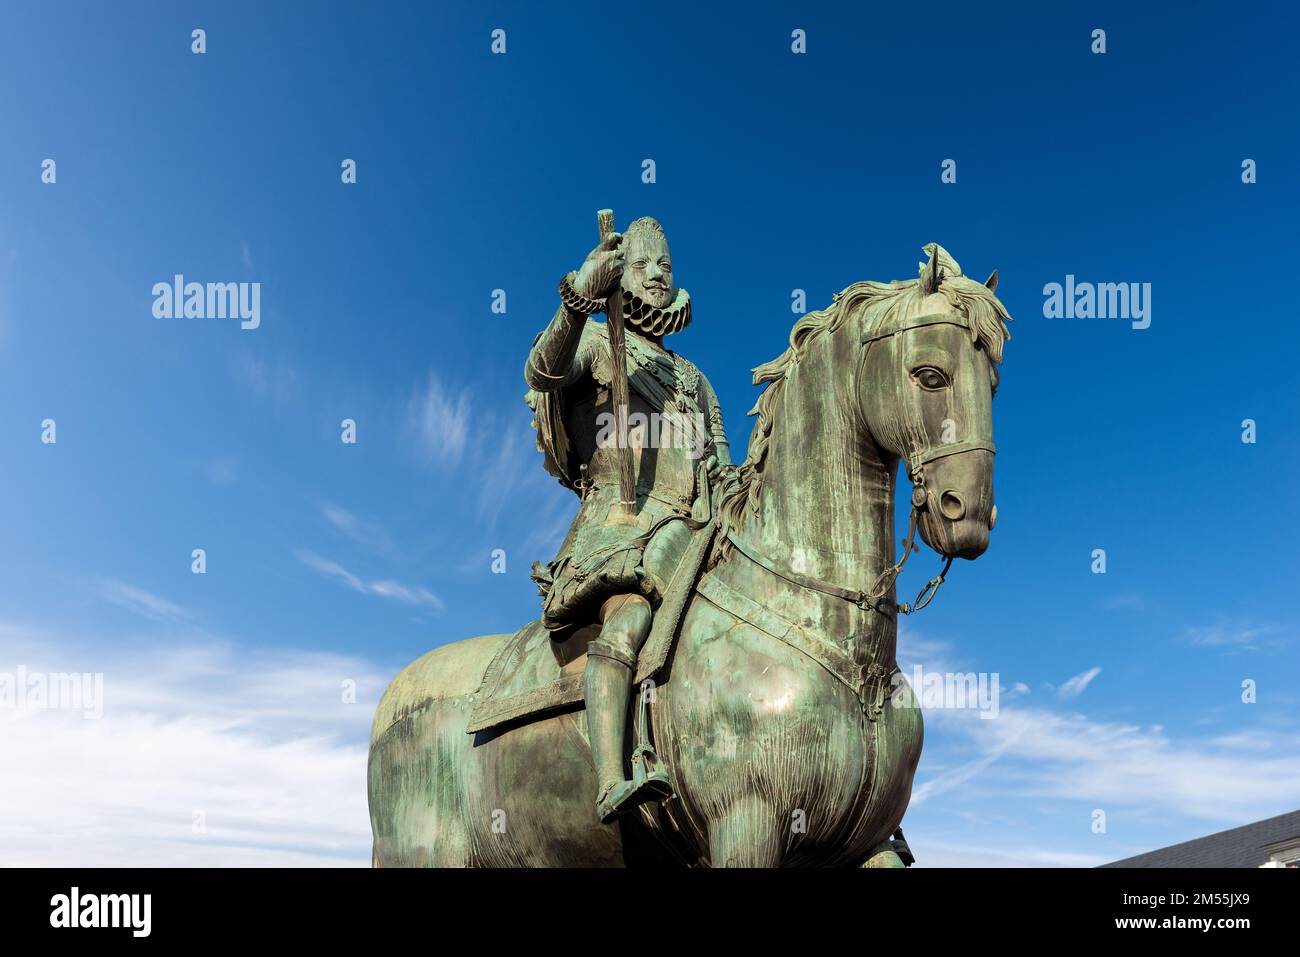 Bronze statue of King Philip III on Horseback (Felipe III or Felipe el Piadoso), by Giambologna and Pietro Tacca in Plaza Mayor (main square), Madrid. Stock Photo